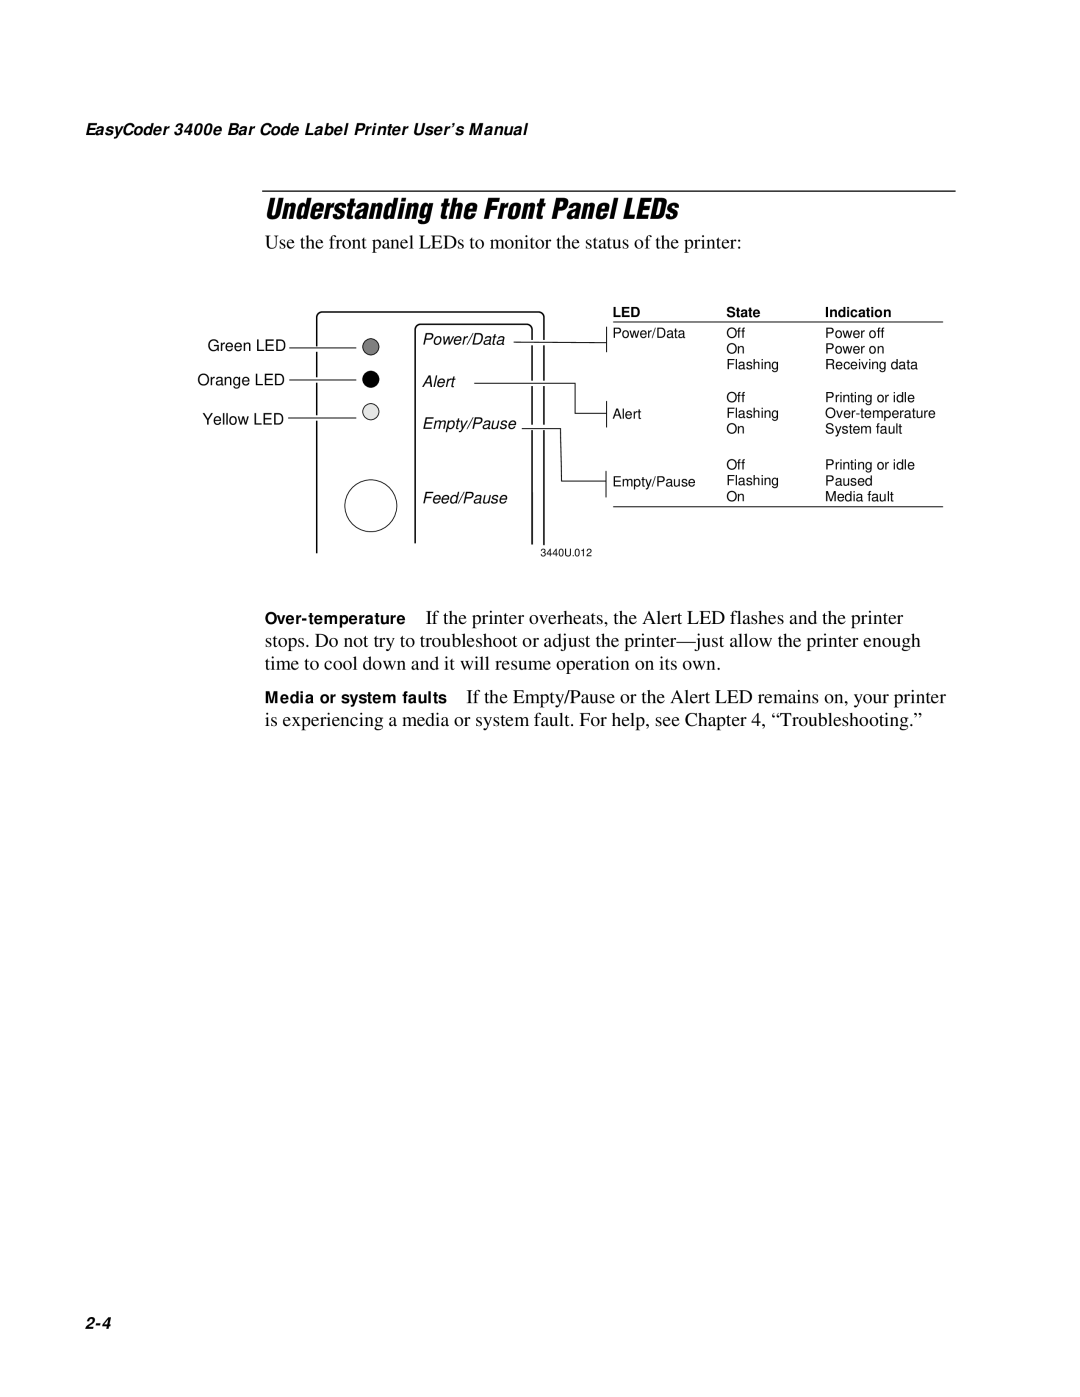 IBM user manual Understanding the Front Panel LEDs, EasyCoder 3400e Bar Code Label Printer User’s Manual 